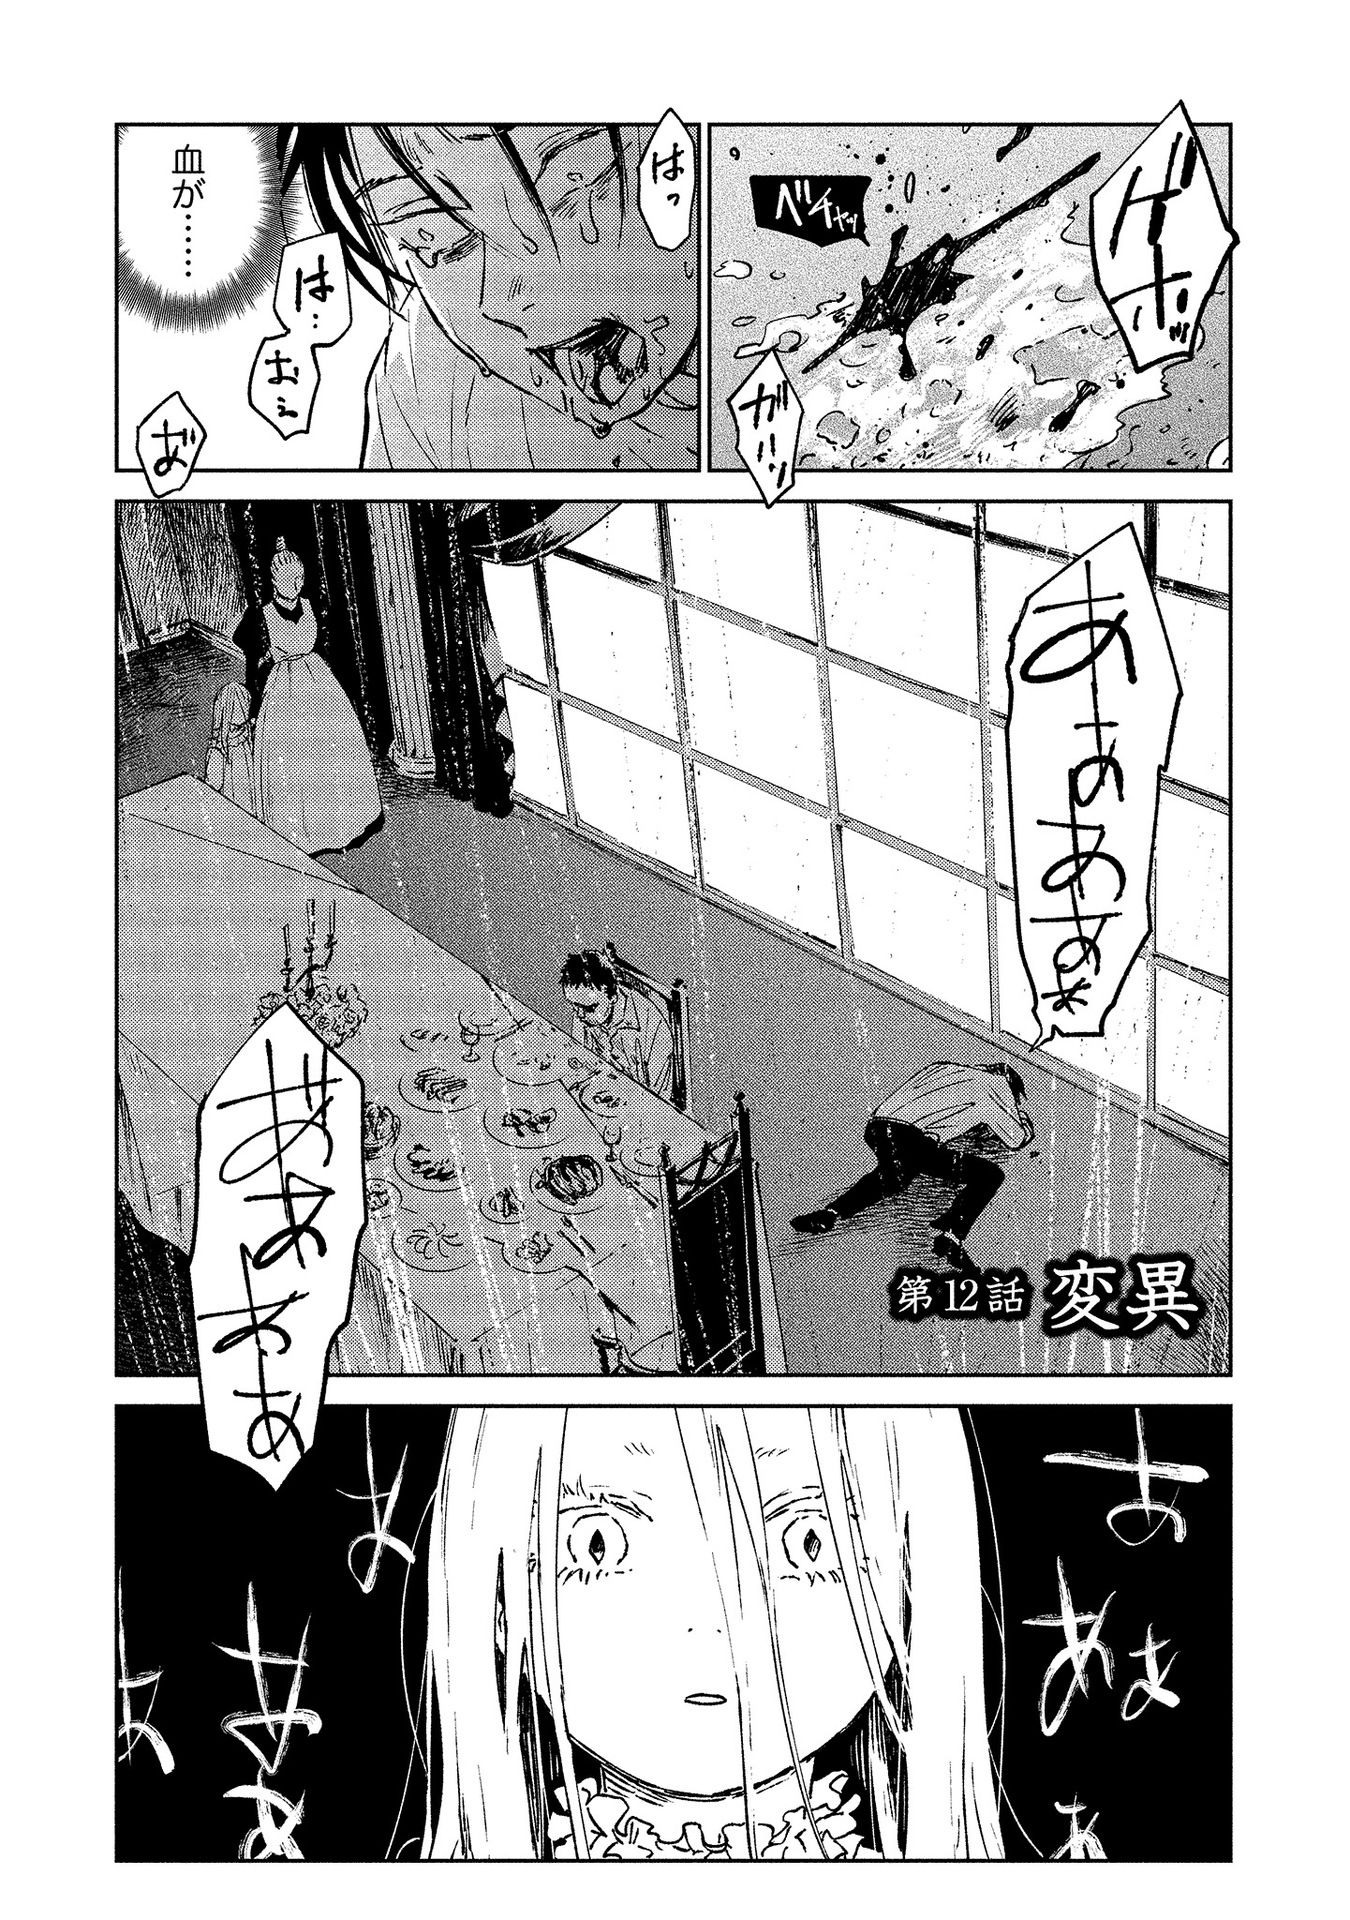 Chikai no Noah - Chapter 12 - Page 1